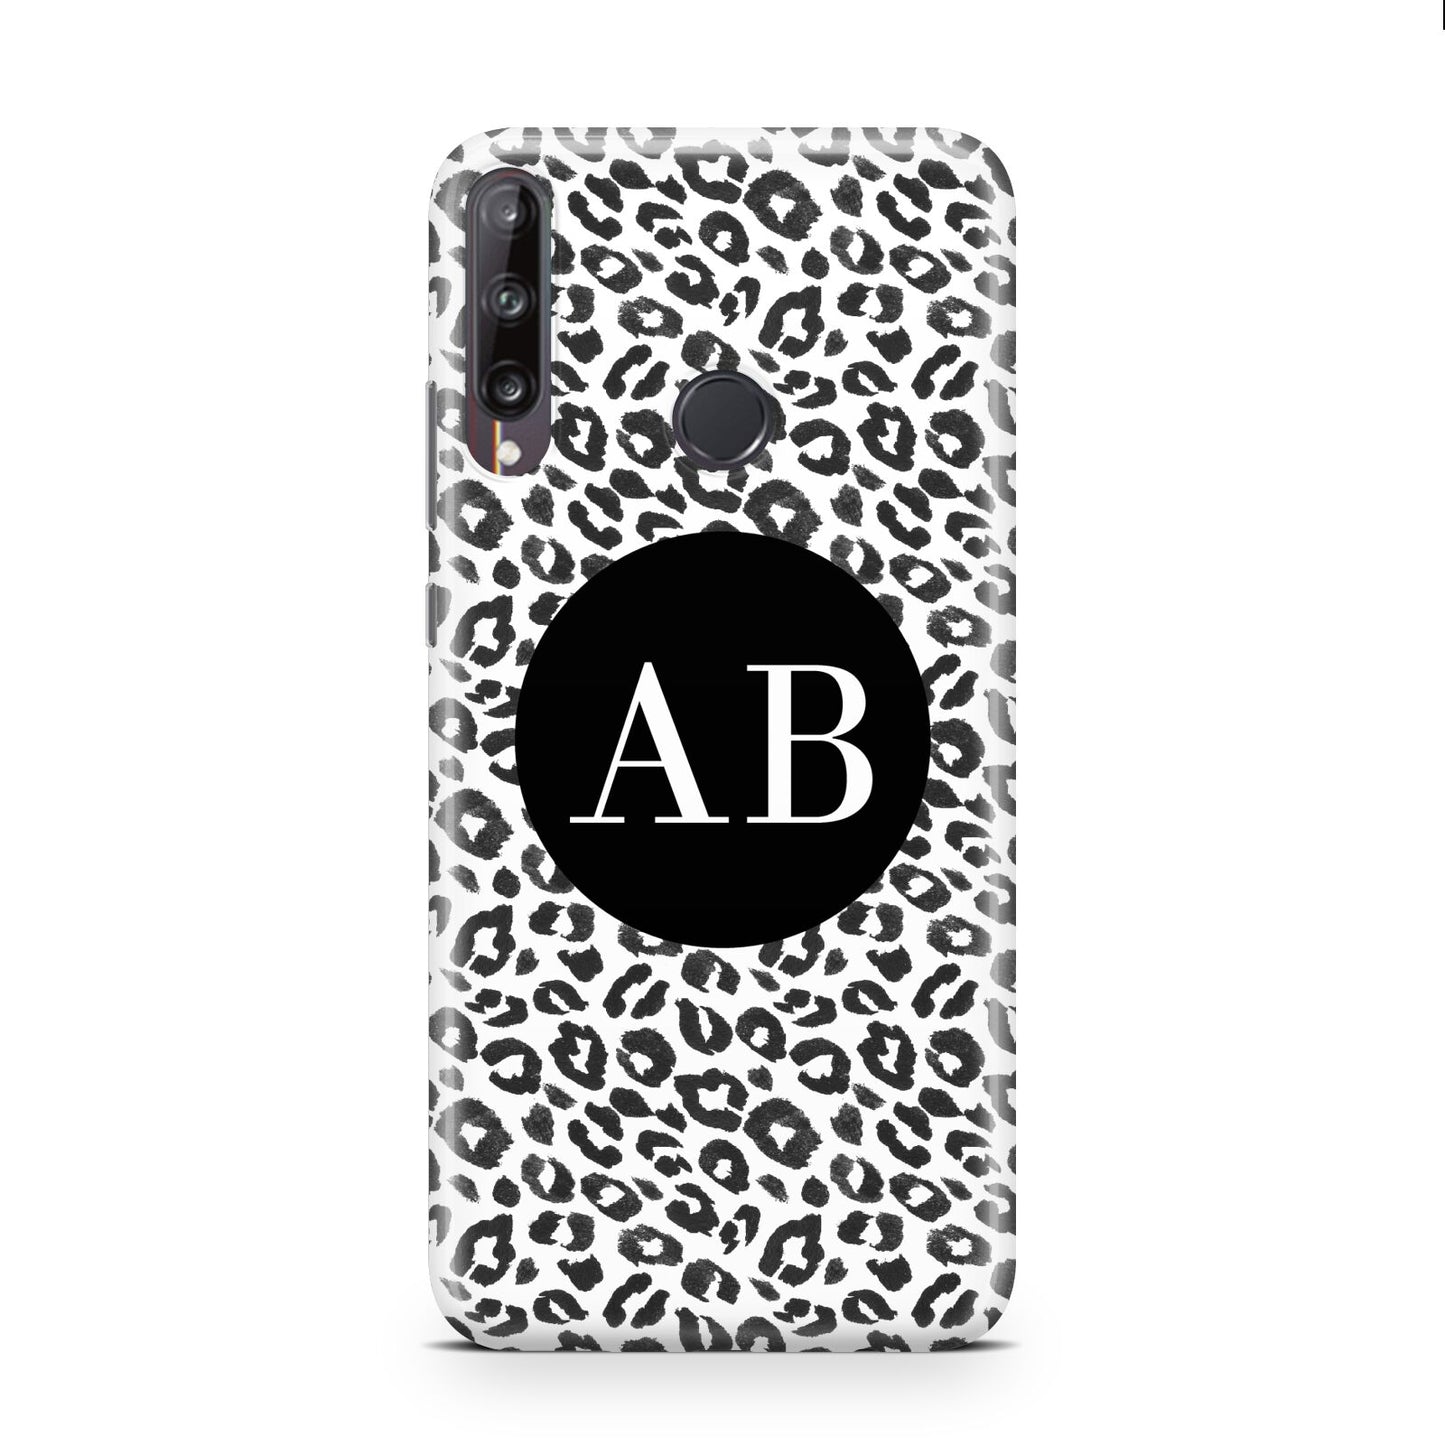 Leopard Print Black and White Huawei P40 Lite E Phone Case